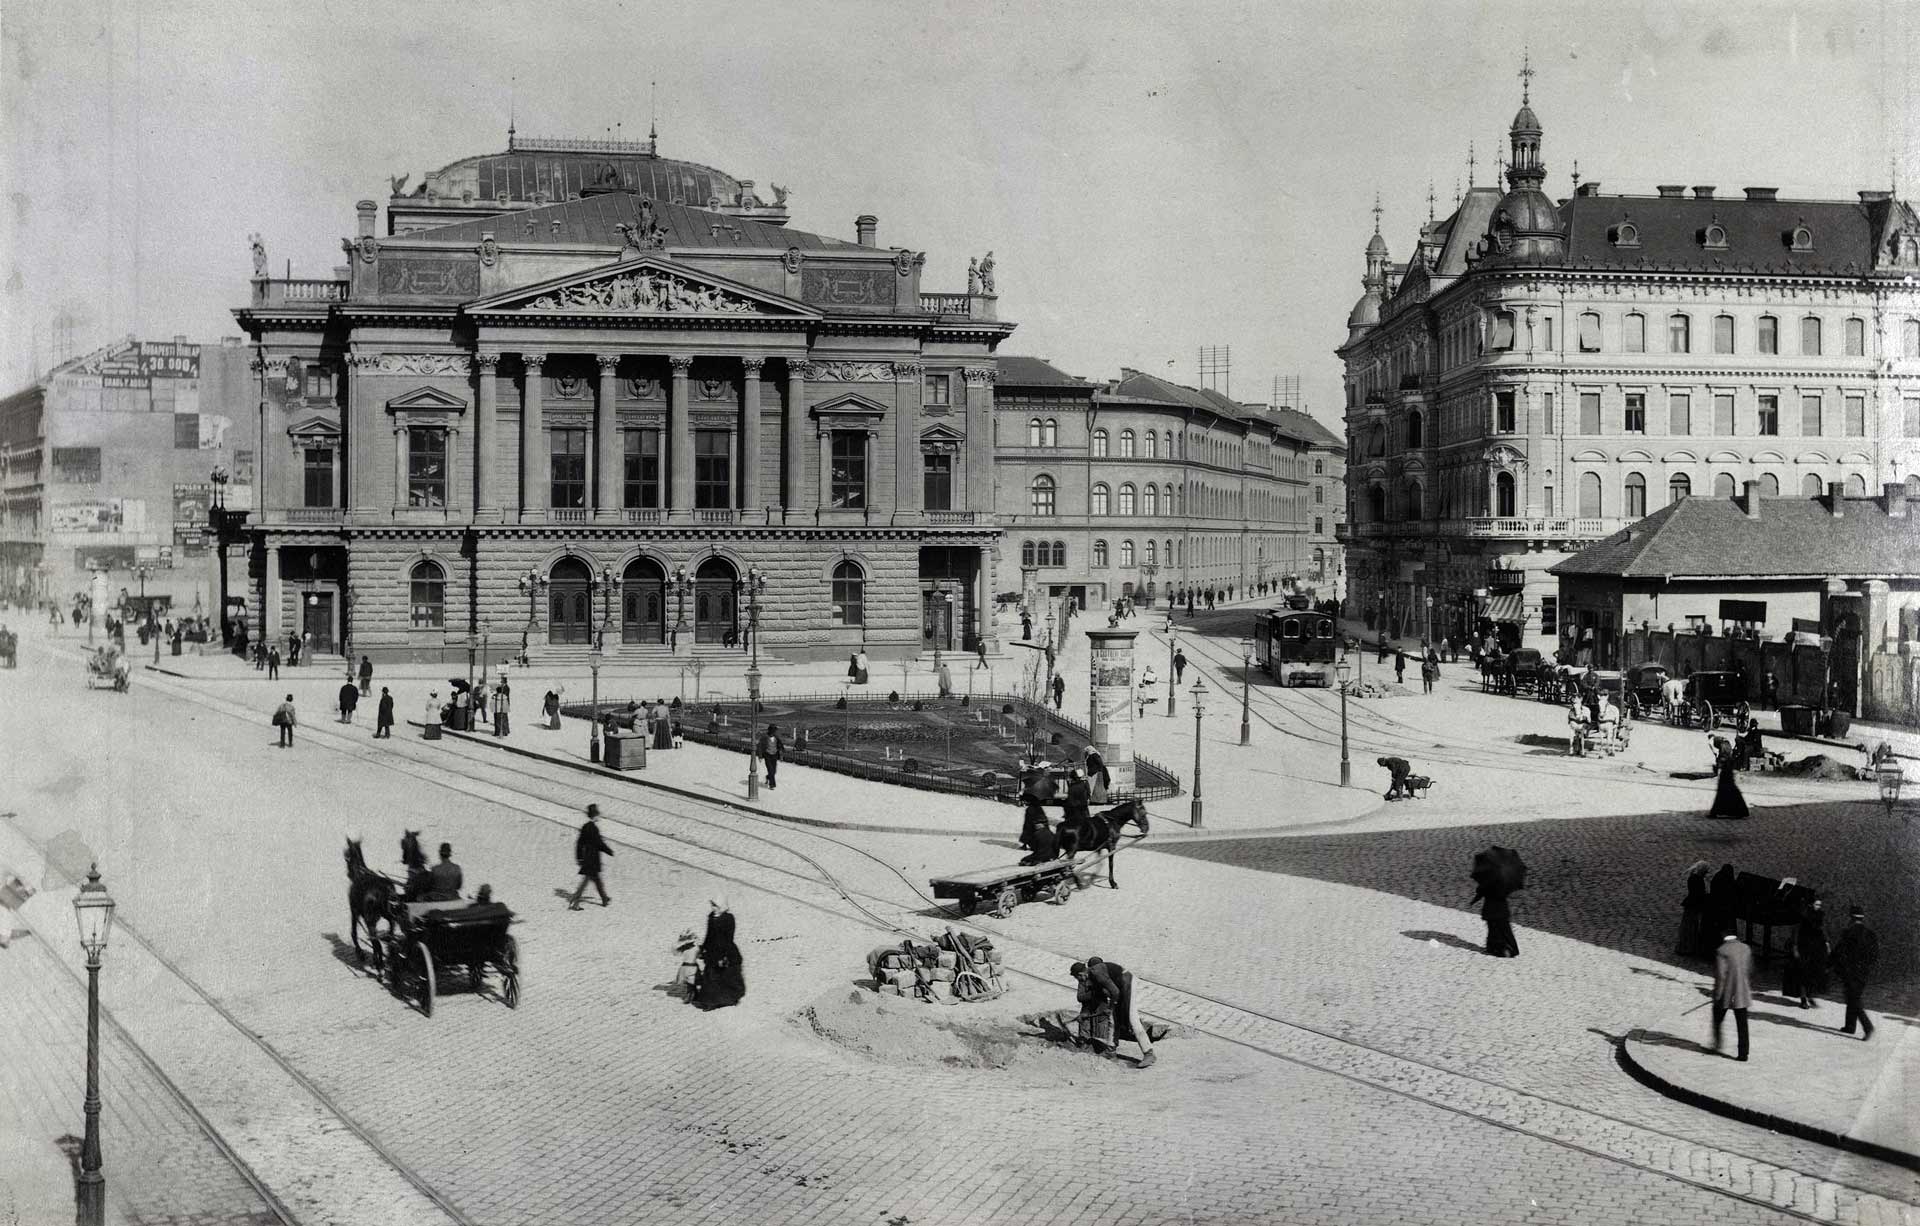 Blaha Lujza Square (then the junction of Népszínház Street and Rákóczi Street), the building of the Népszínház (the later National Theatre) around 1893. (source: Fortepan / Budapest City Archives)